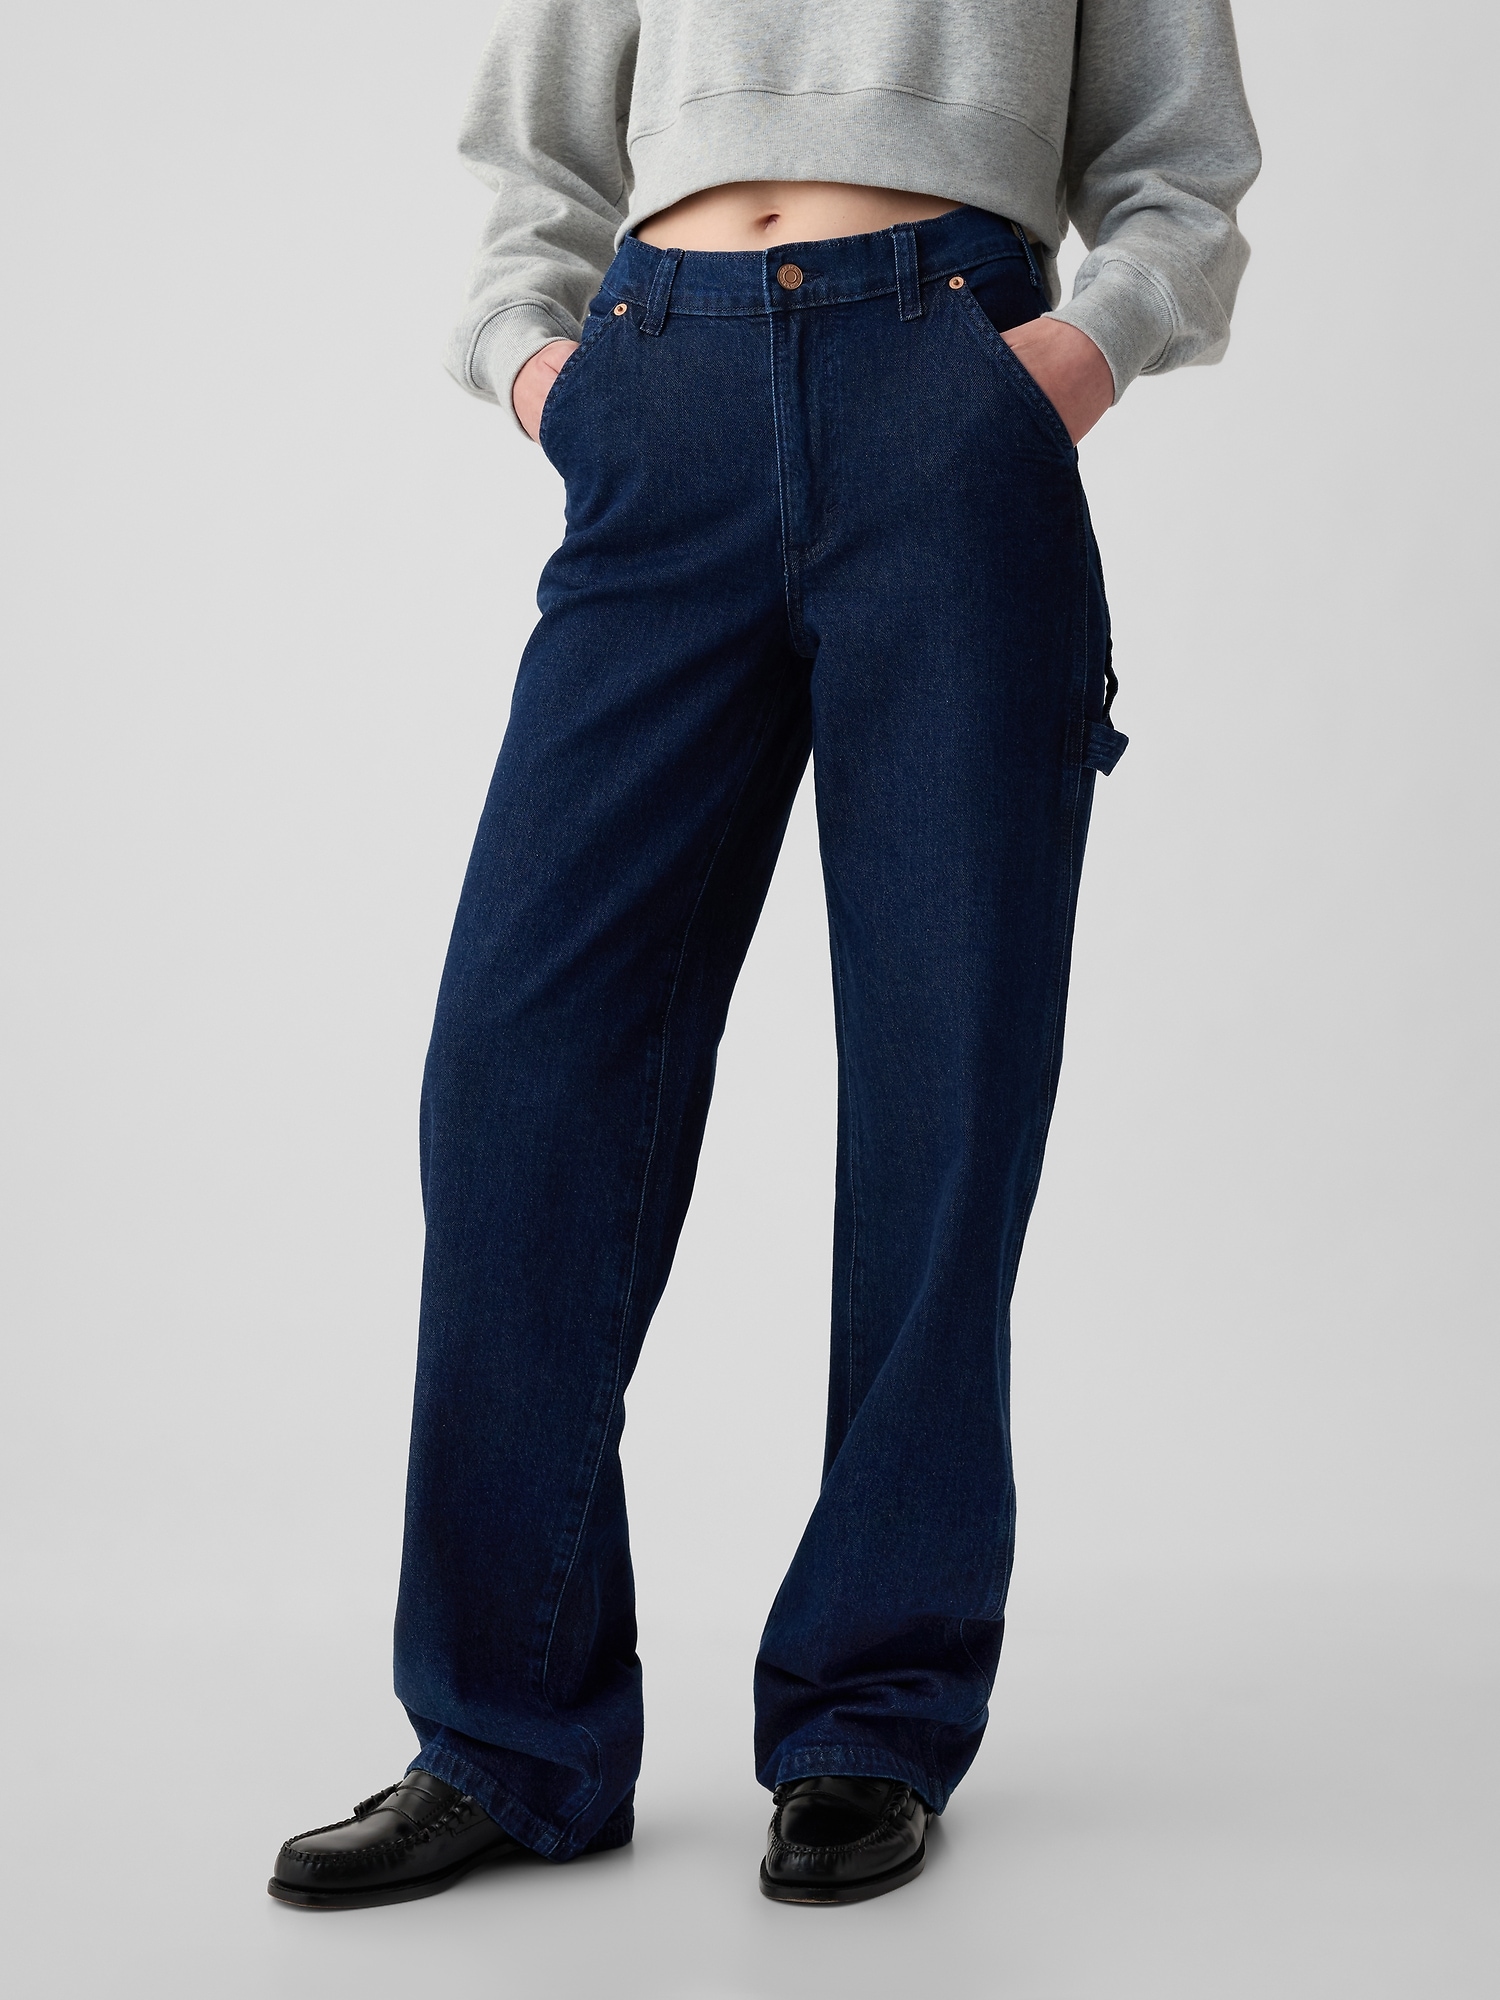 Gap Original Jeans Womens Size 16 Straight Fit Mid Rise Denim Dark Blue